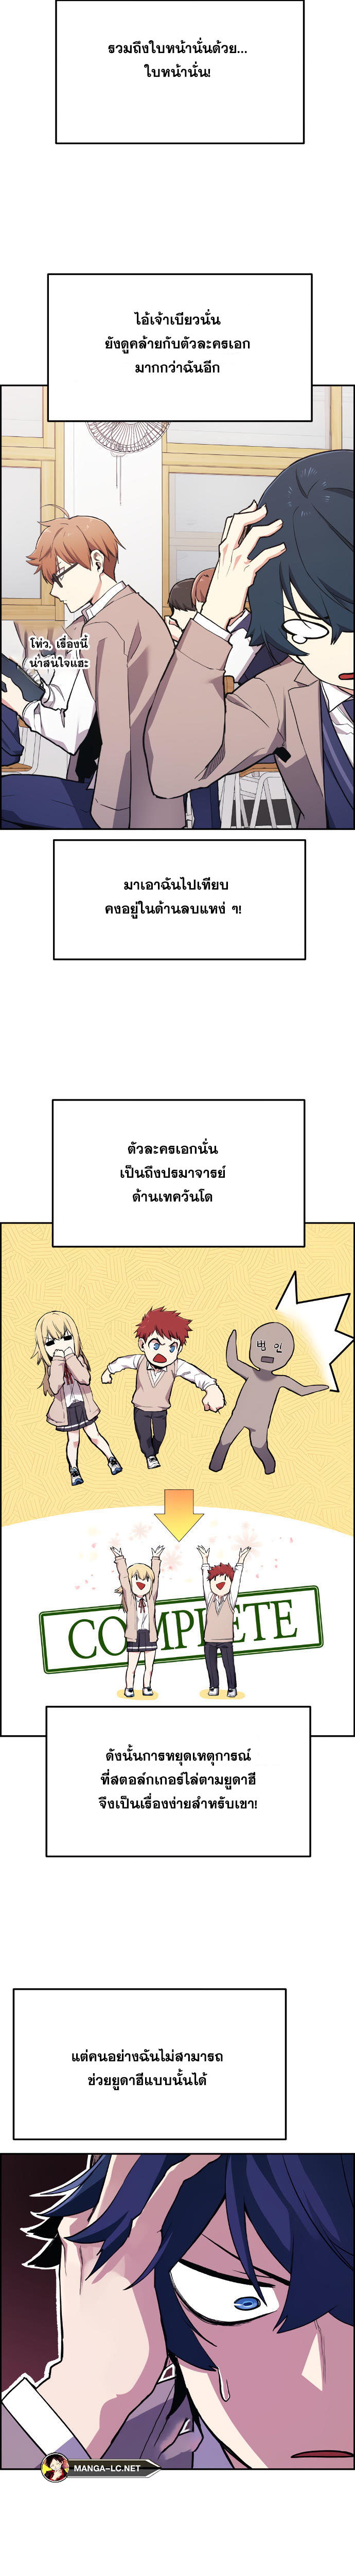 Webtoon Character Na Kang Lim ร ยธโ€ขร ยธยญร ยธโขร ยธโ€”ร ยธยตร ยนห 2 (7)